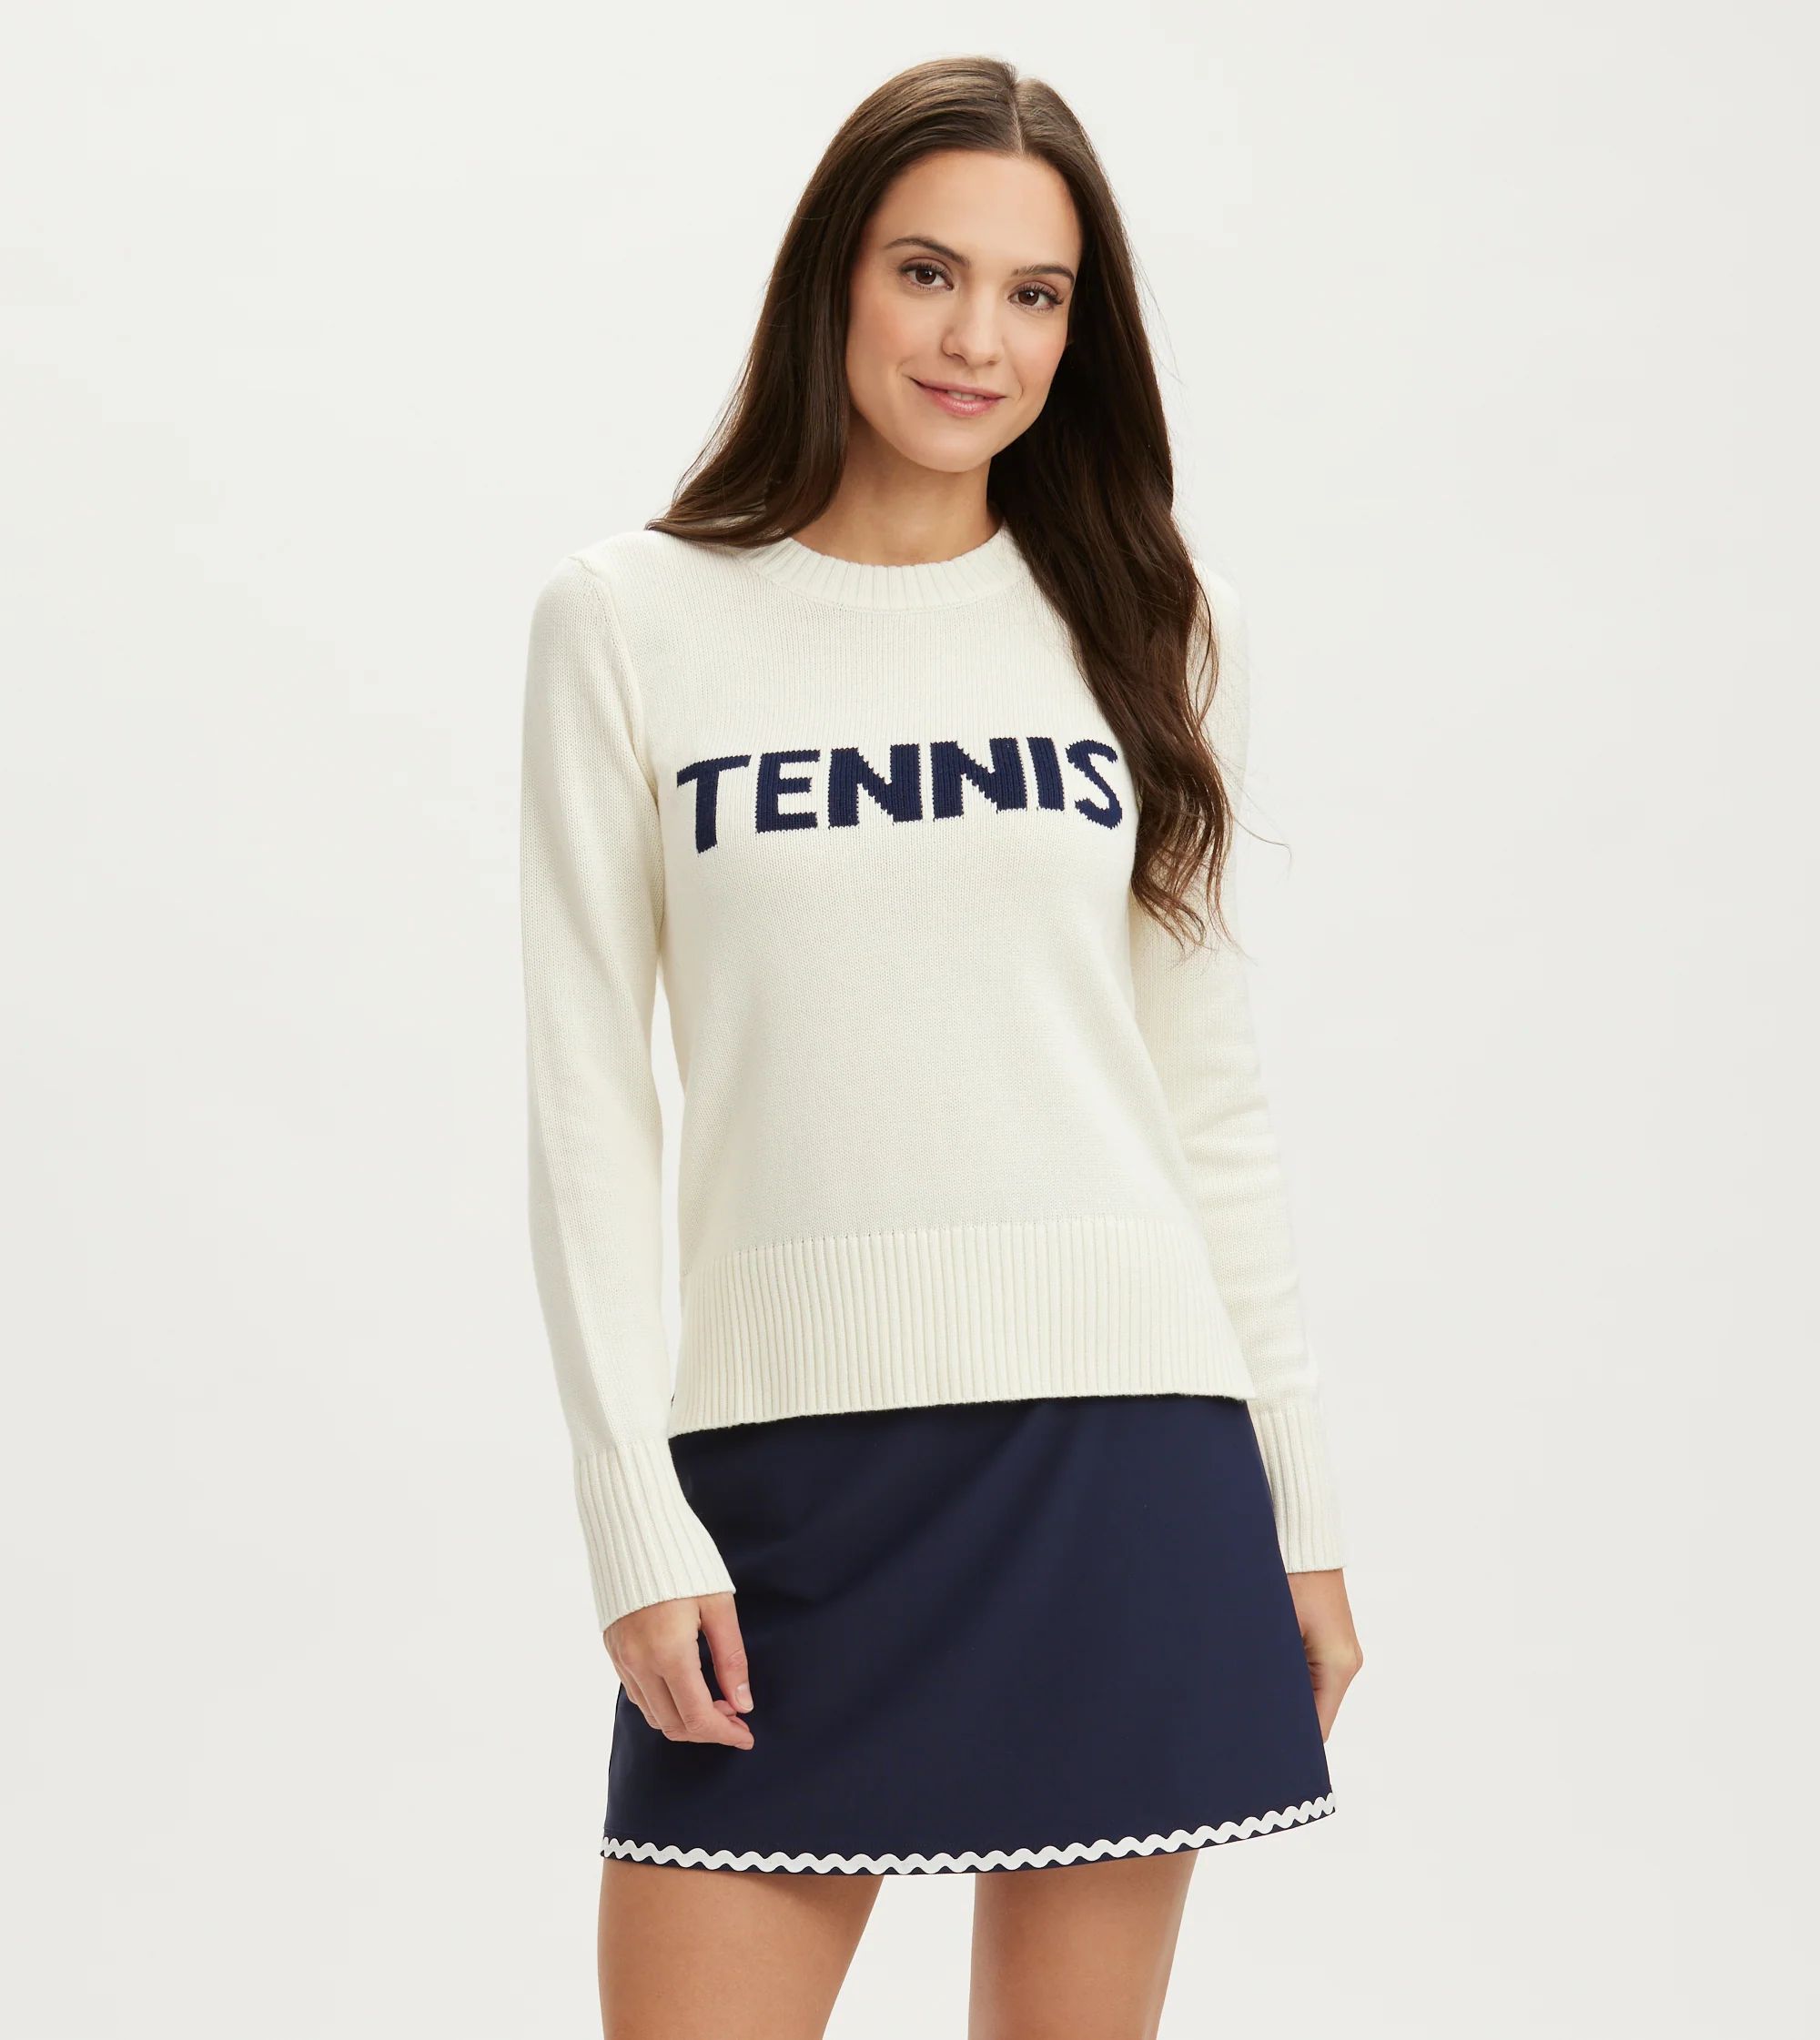 Renwick Tennis Sweater | Renwick Golf